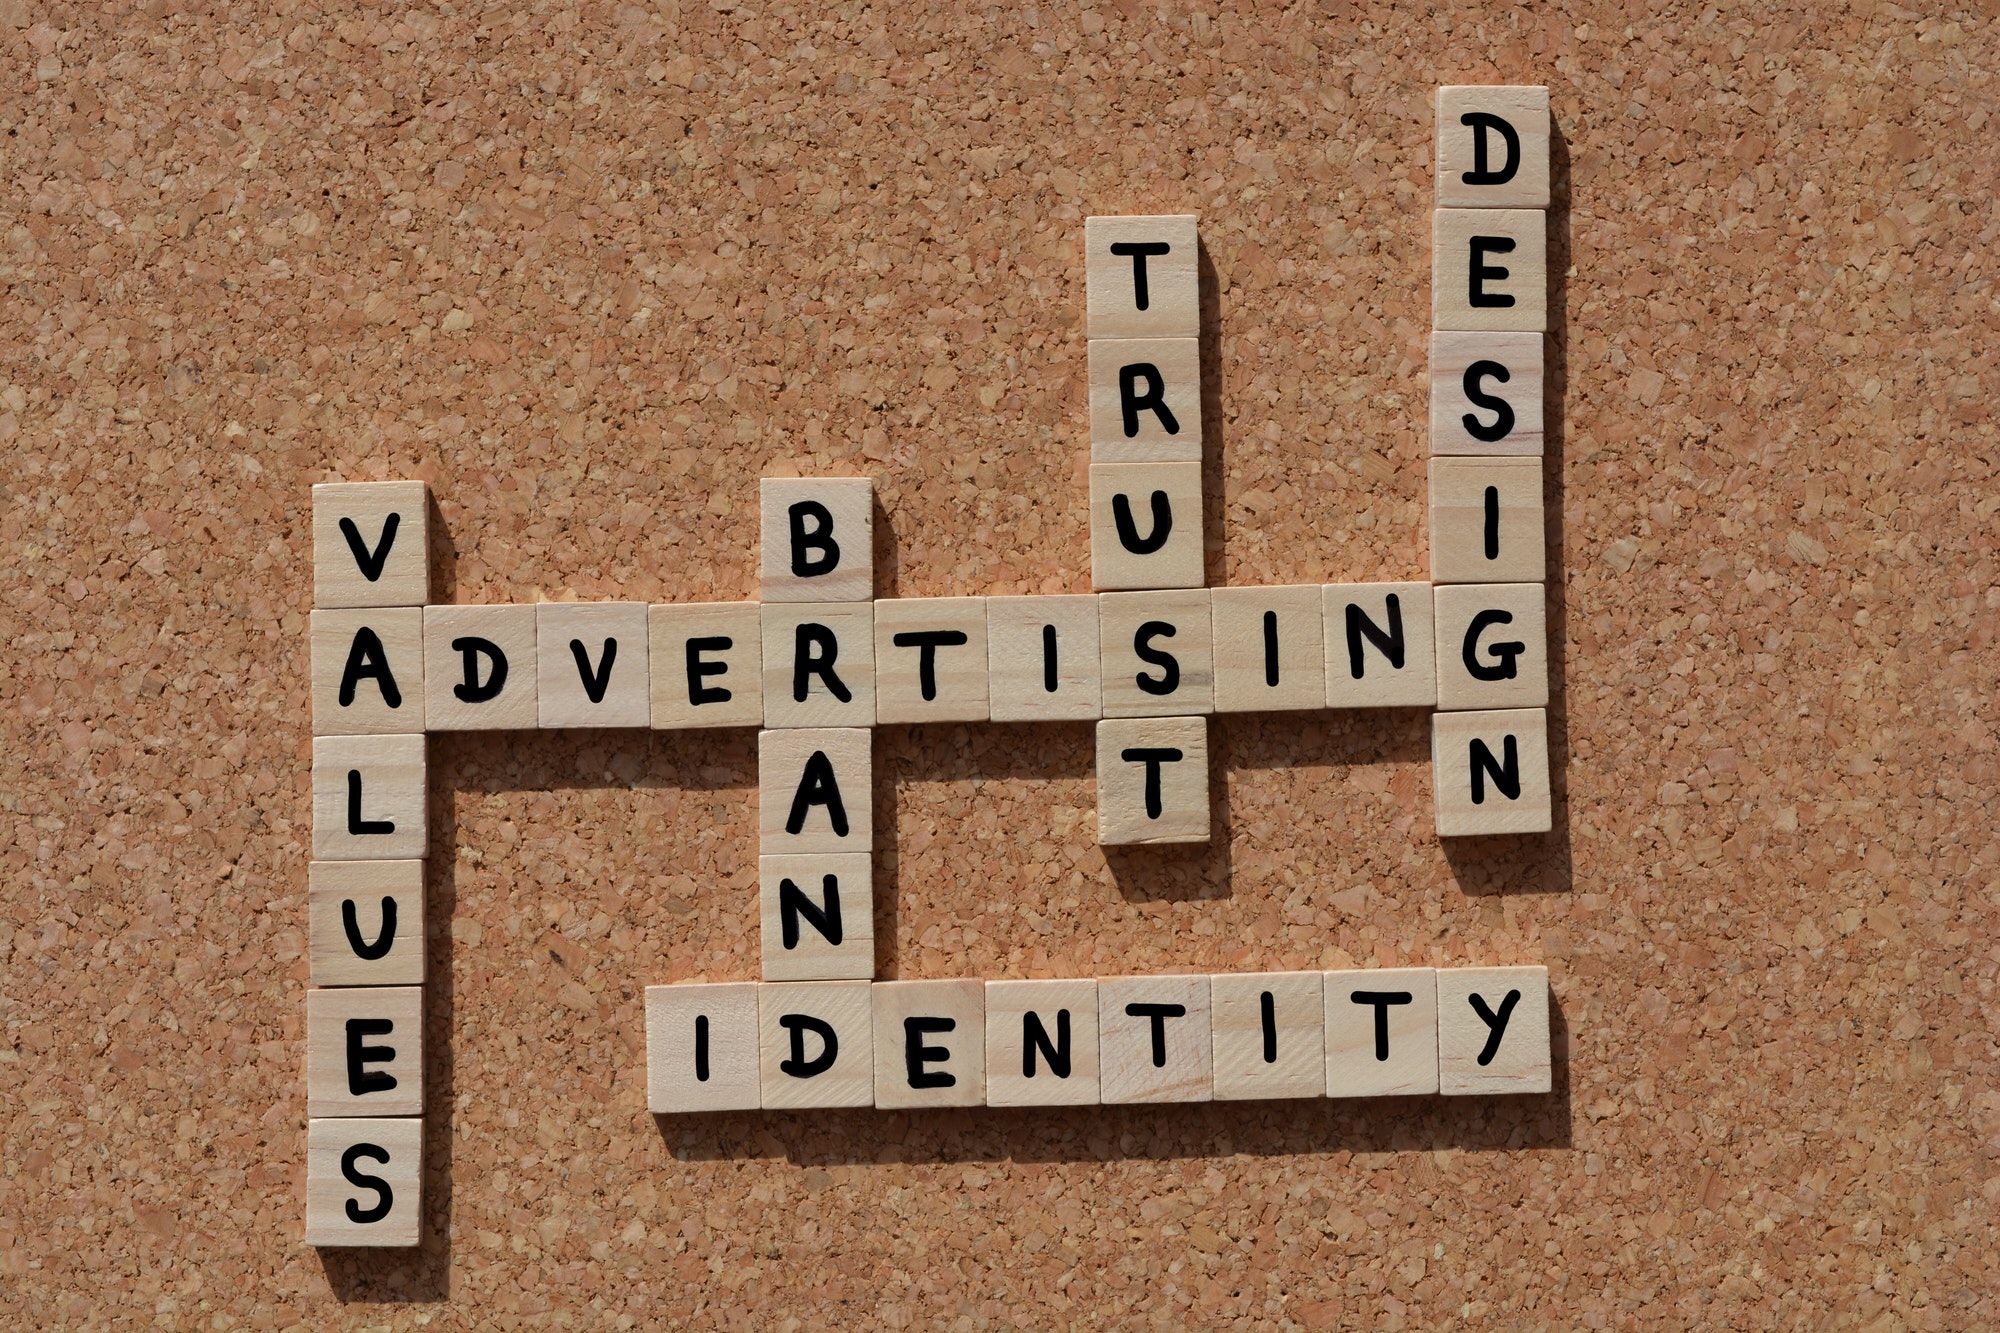 Design, Advertising, Trust, Values, Brand, Identity, words in crossword form